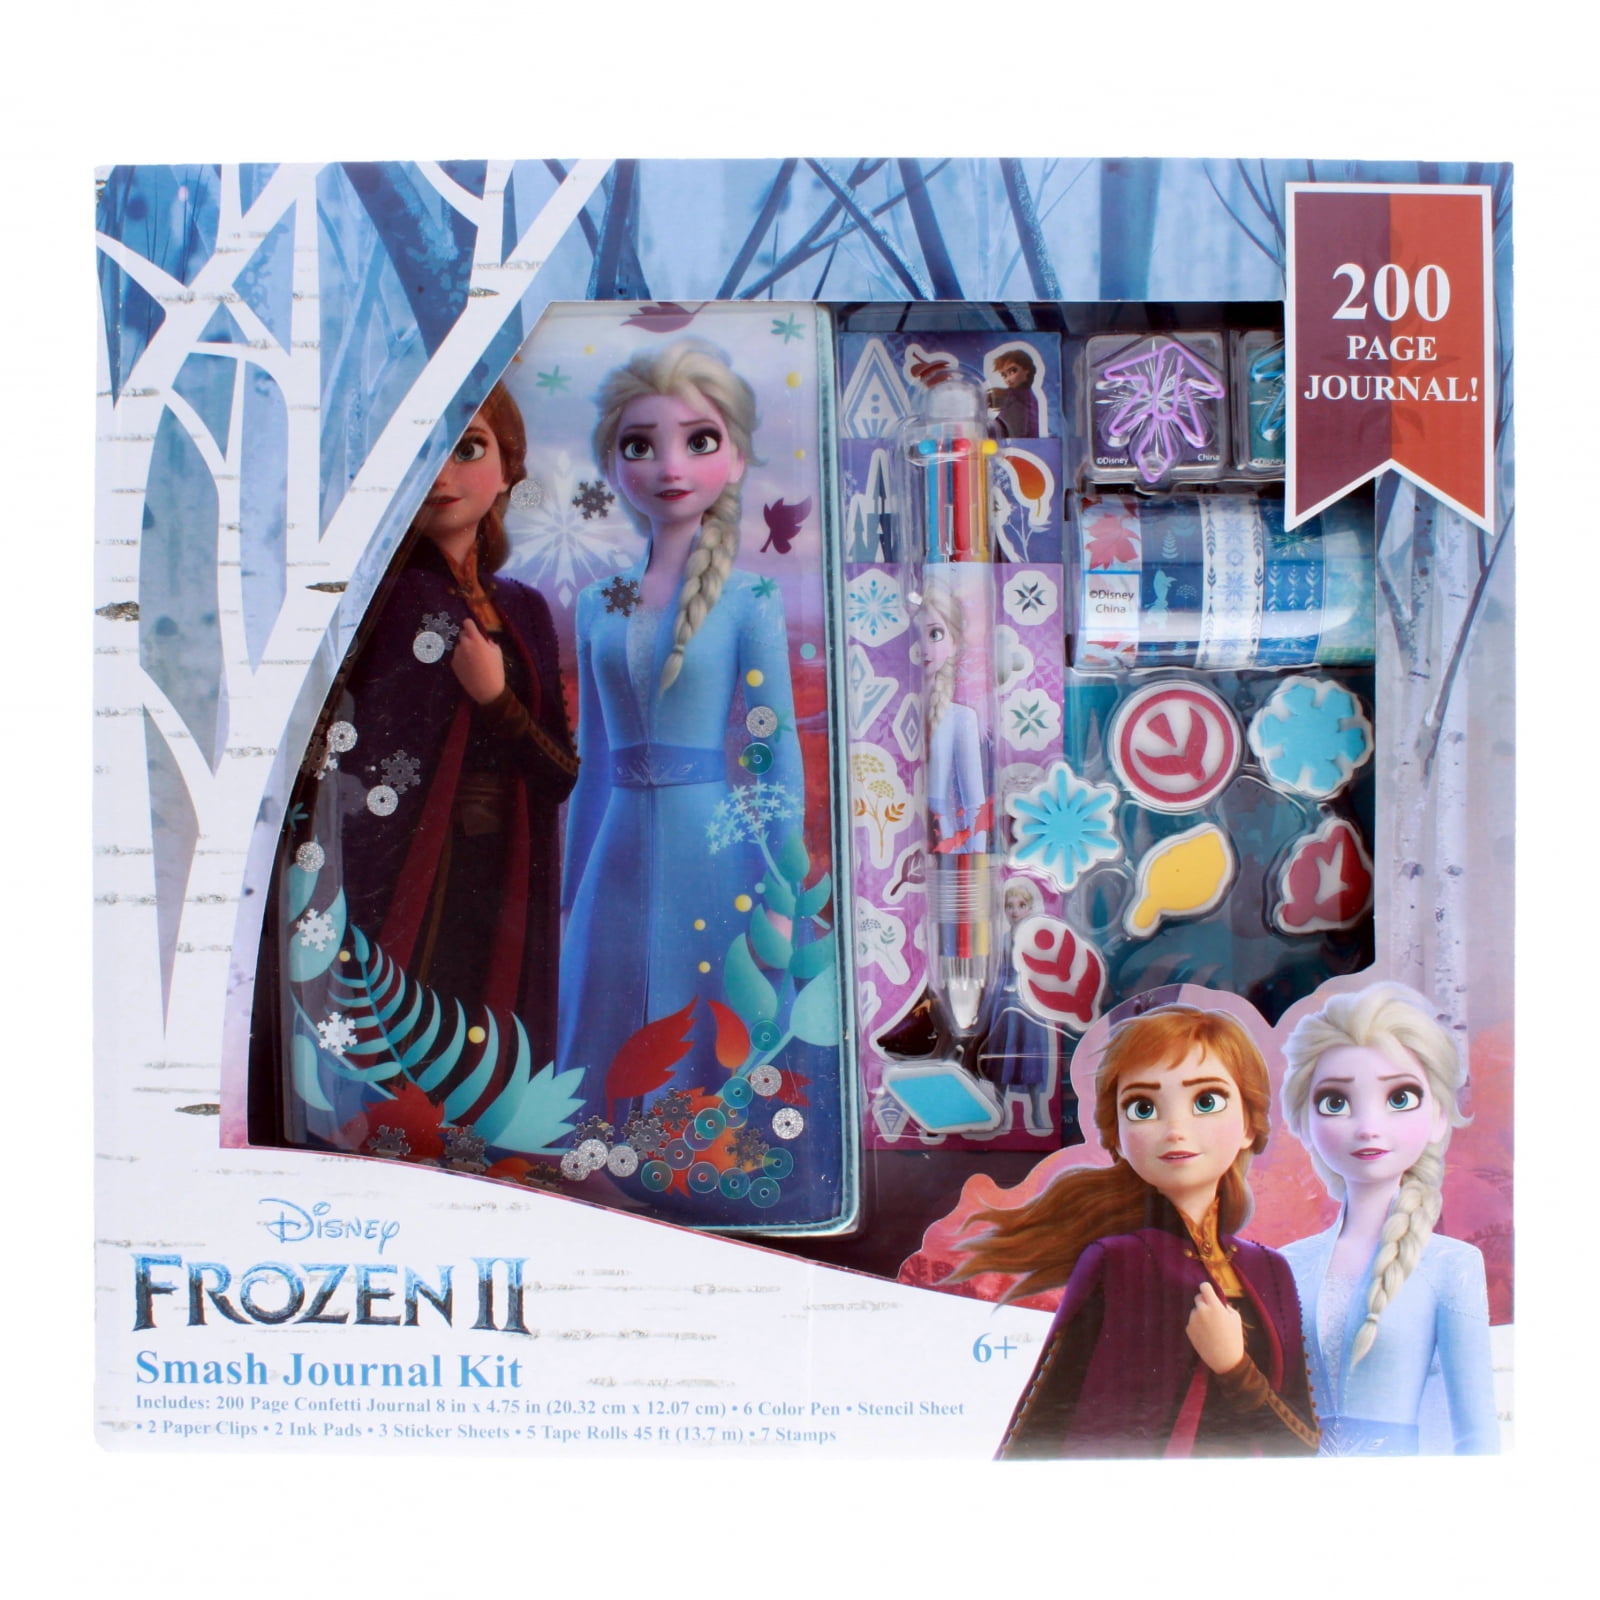 Disney Frozen Princess Anna Elsa Fun Activity Stationery Art Travel Set New Gift 